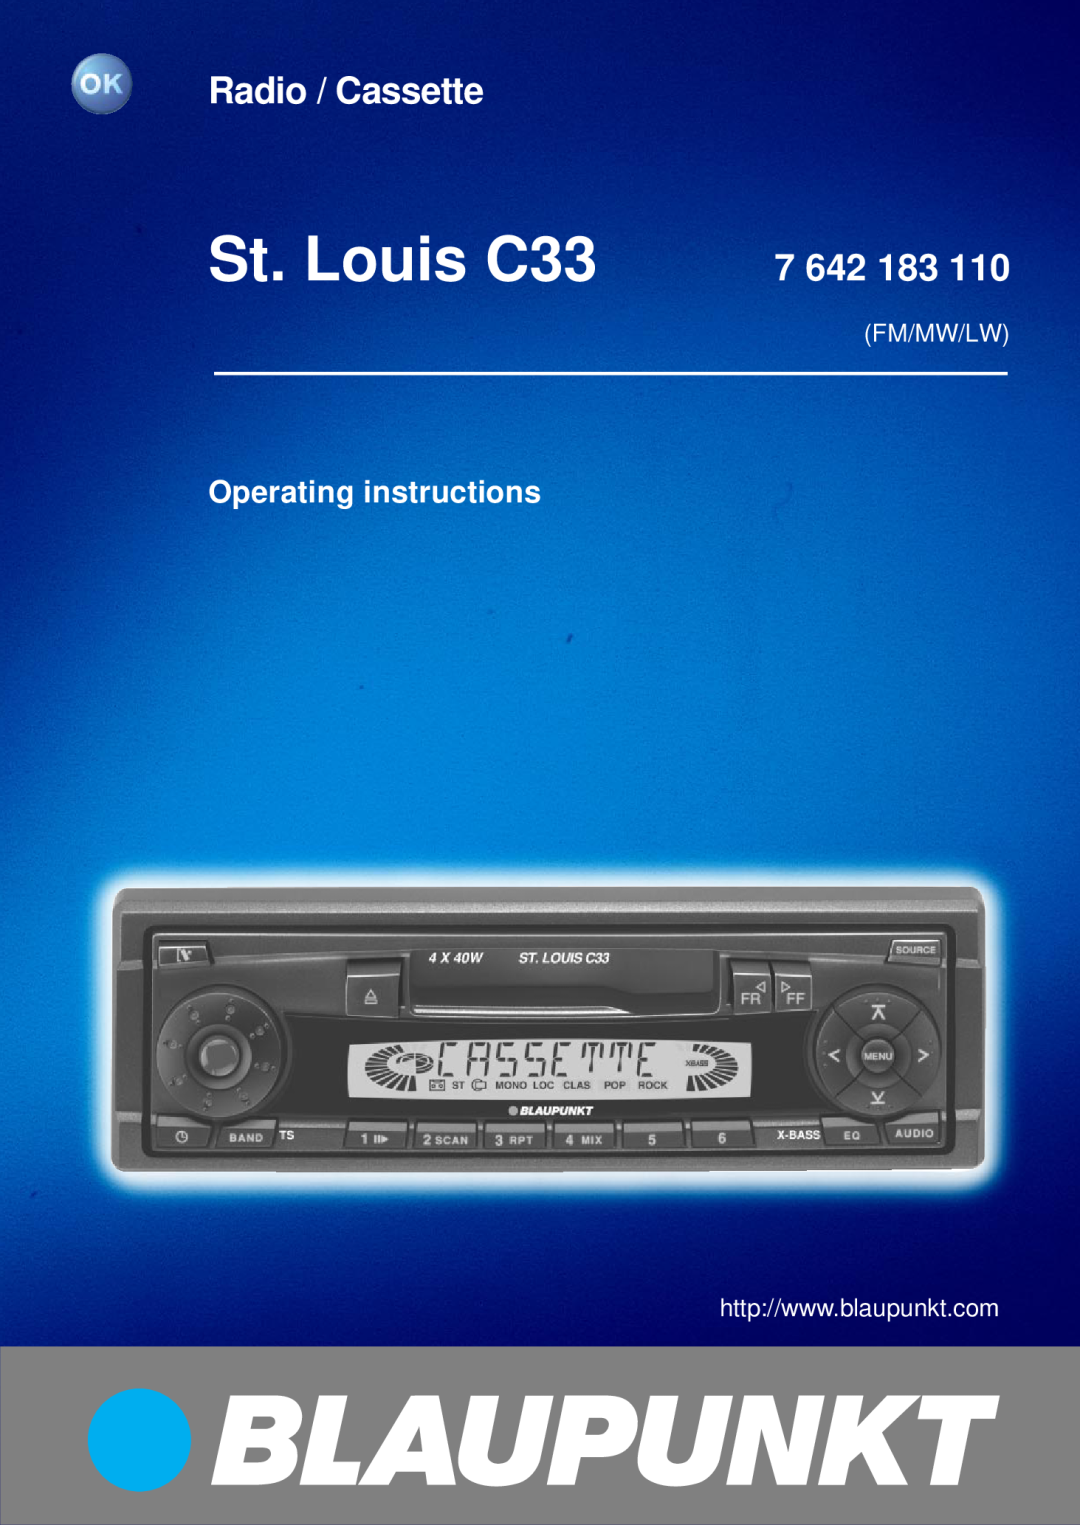 Blaupunkt 7 642 183 110 operating instructions St. Louis C33, Radio / Cassette, Operating instructions, Fm/Mw/Lw 